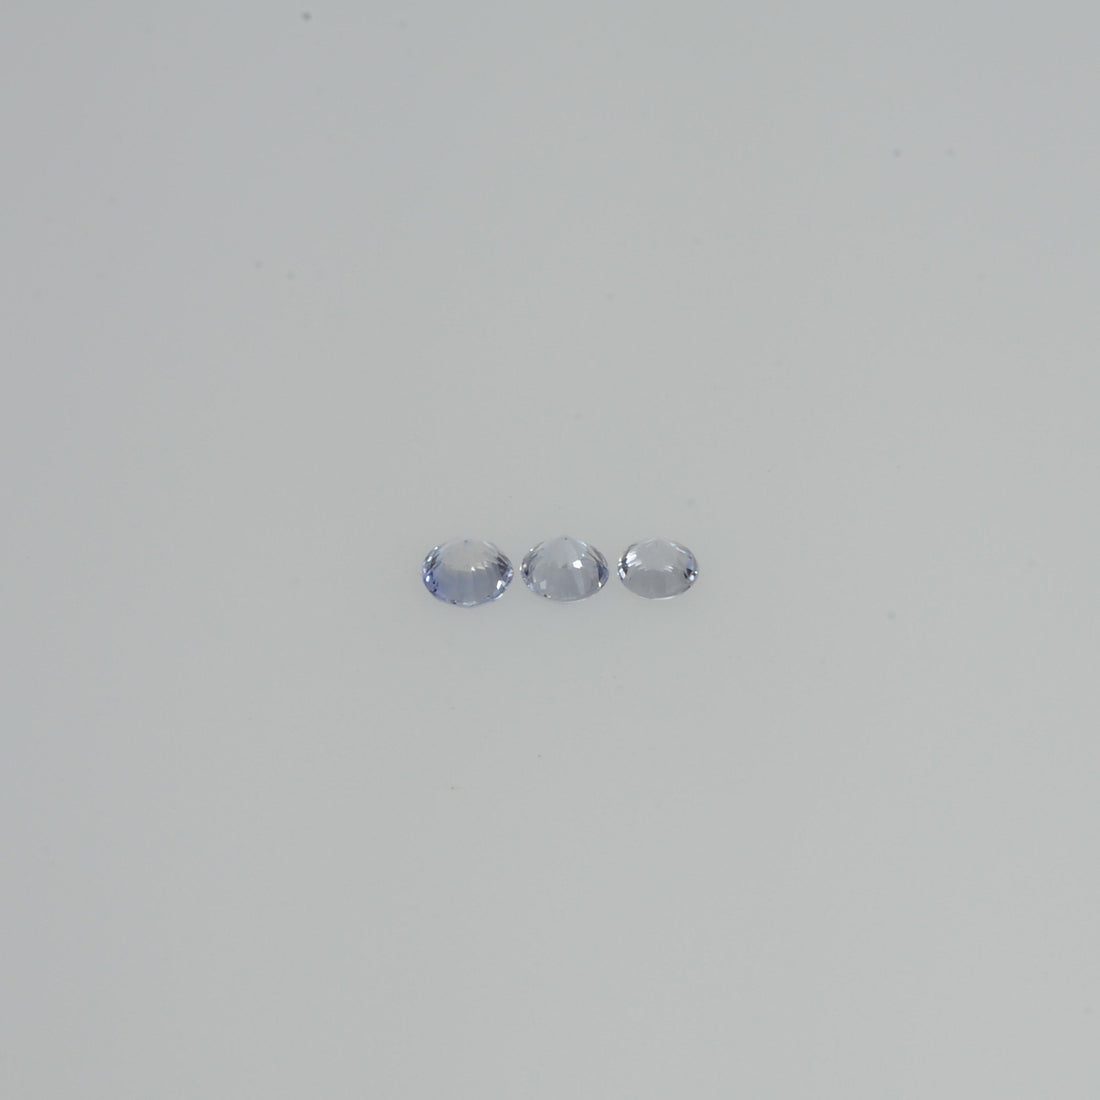 2.5-4.0   mm Natural Whitish Blue Sapphire Loose Cleanish Quality  Gemstone Round Diamond Cut - Thai Gems Export Ltd.